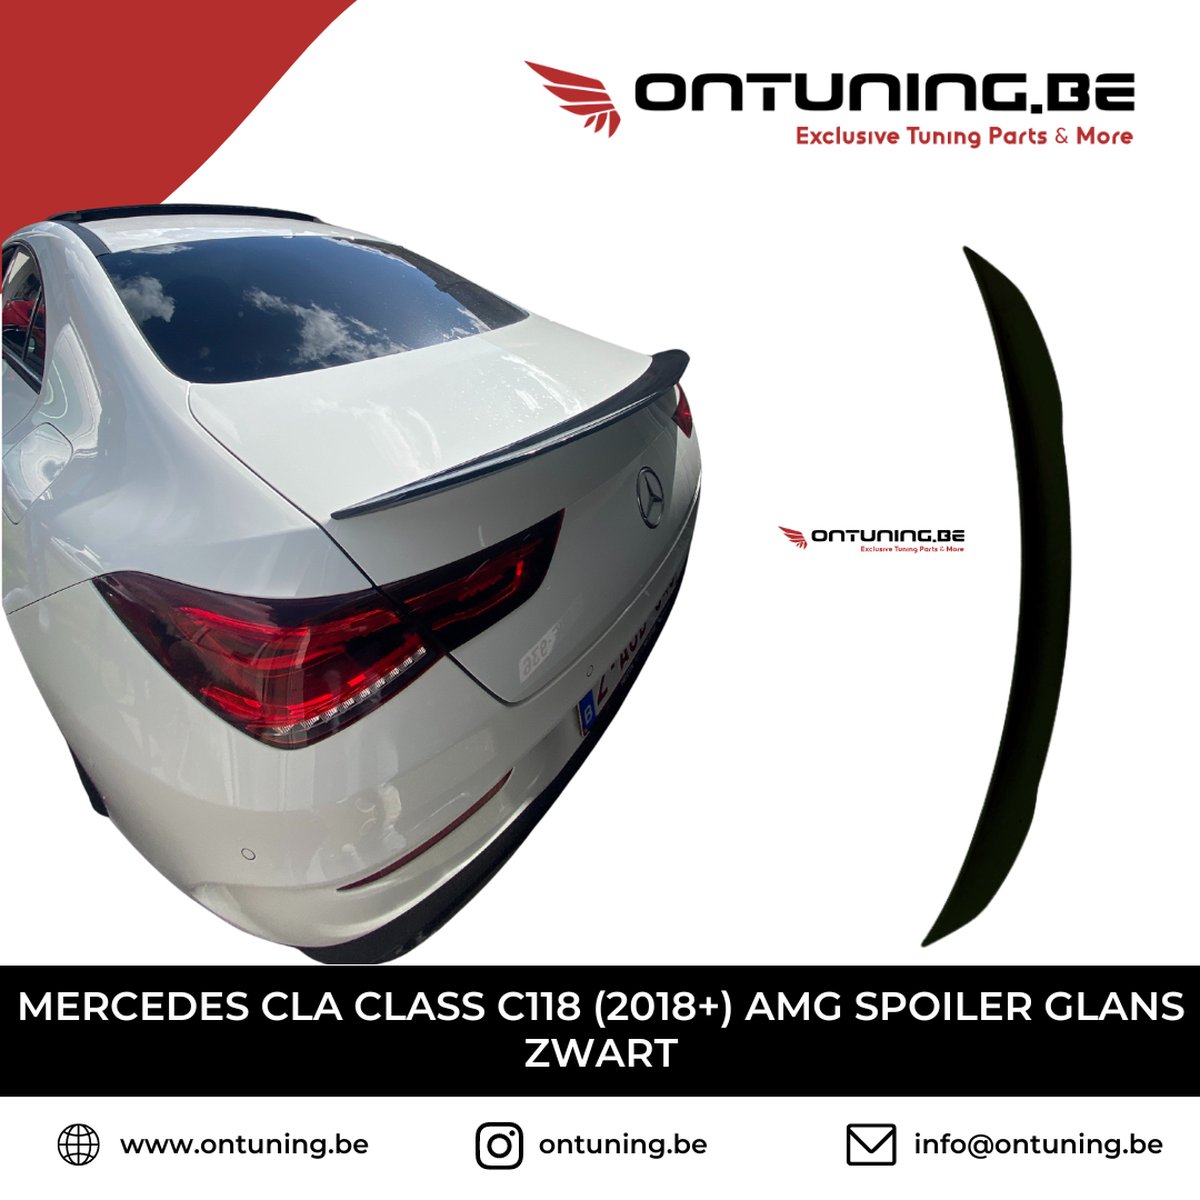 Mercedes CLA Class C118 (2018+) AMG Style Look Spoiler Glans Zwart